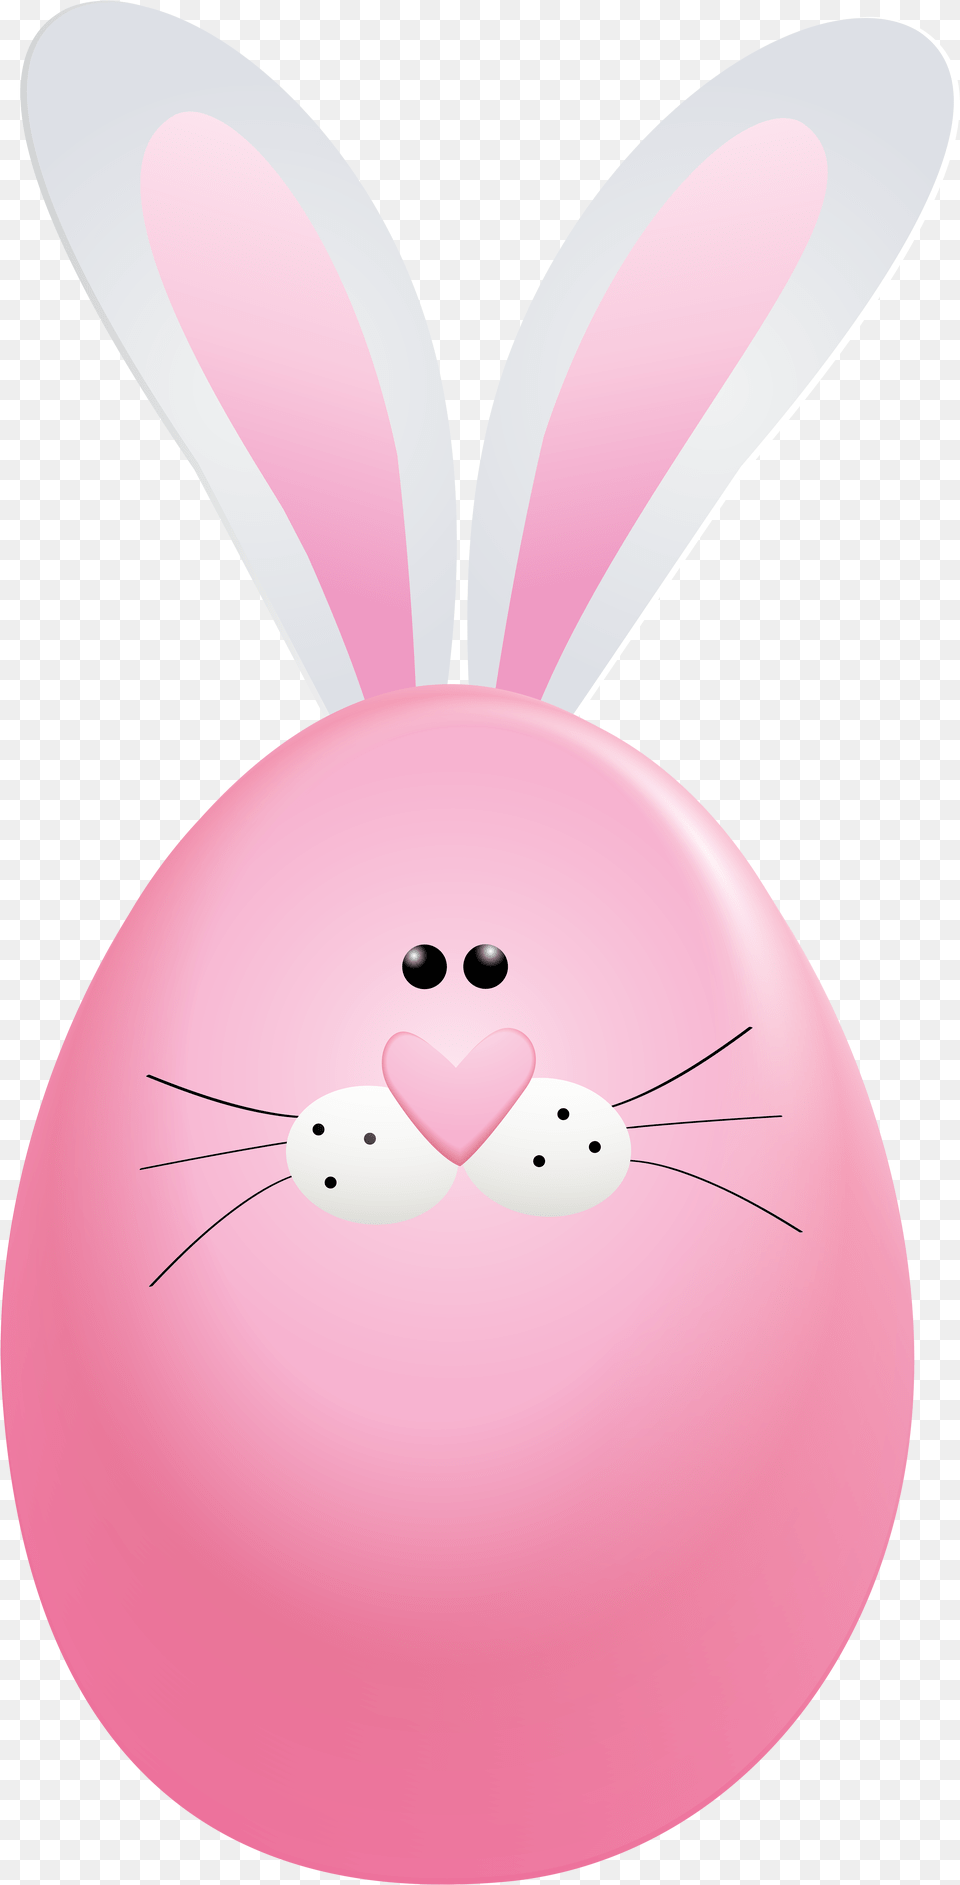 Download Heart Easter Cartoon Rabbit Egg Bunny Clipart Rabbit, Balloon, Food, Appliance, Ceiling Fan Png